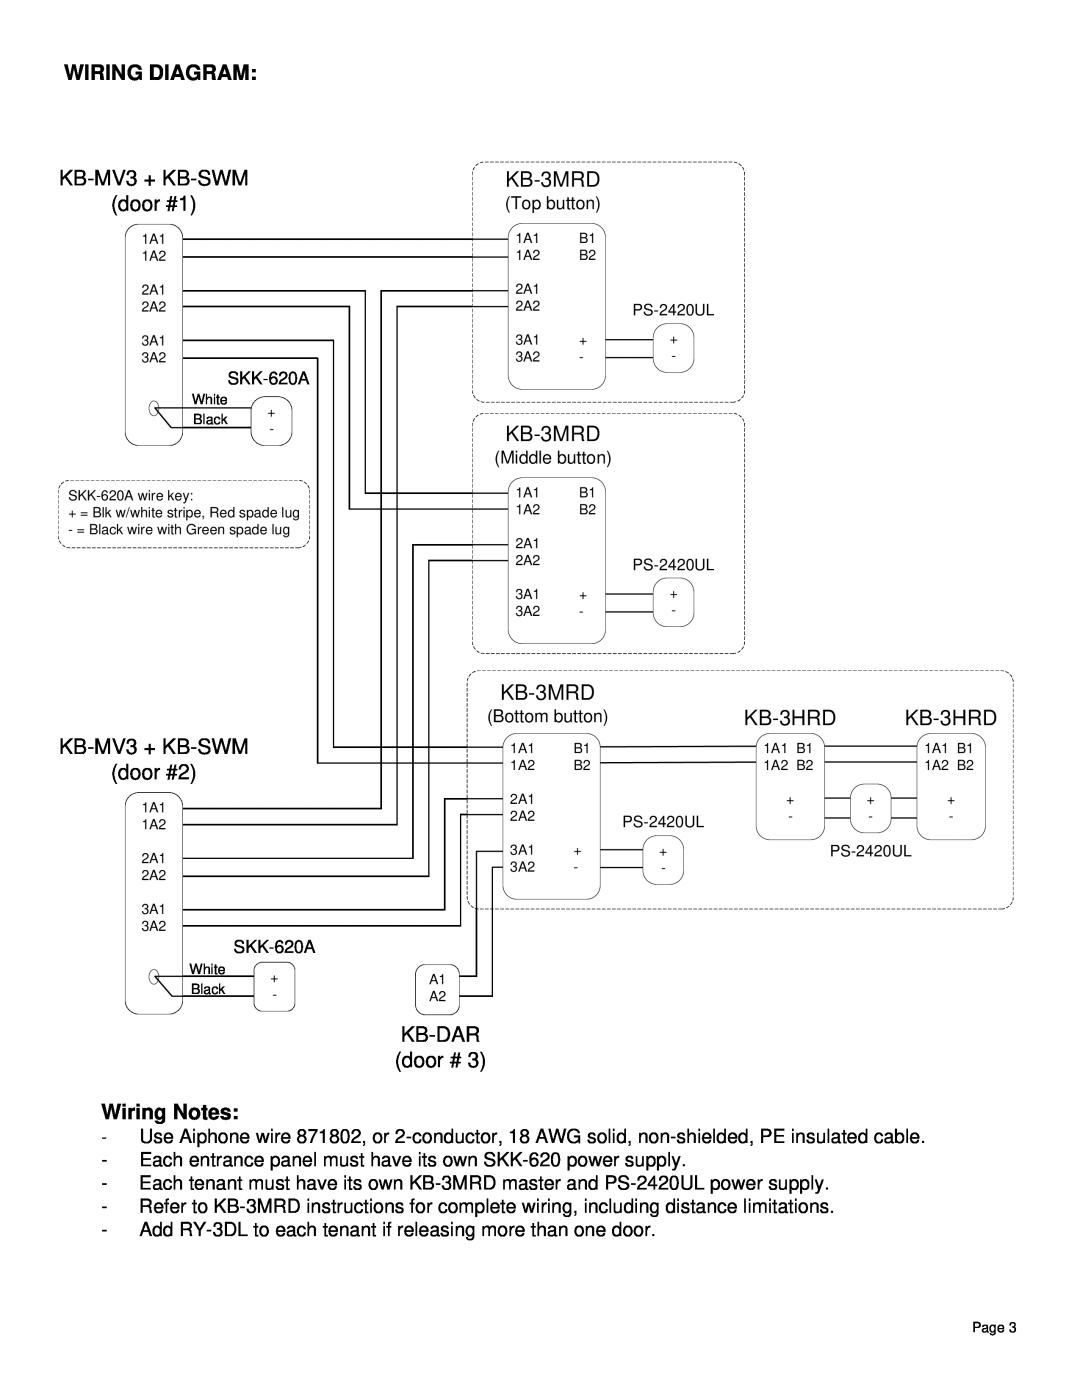 Aiphone KB-MV2, KB-SWS Wiring Diagram, KB-MV3 + KB-SWM door #1, KB-3MRD, KB-MV3 + KB-SWM door #2, KB-3HRD, KB-DAR door # 